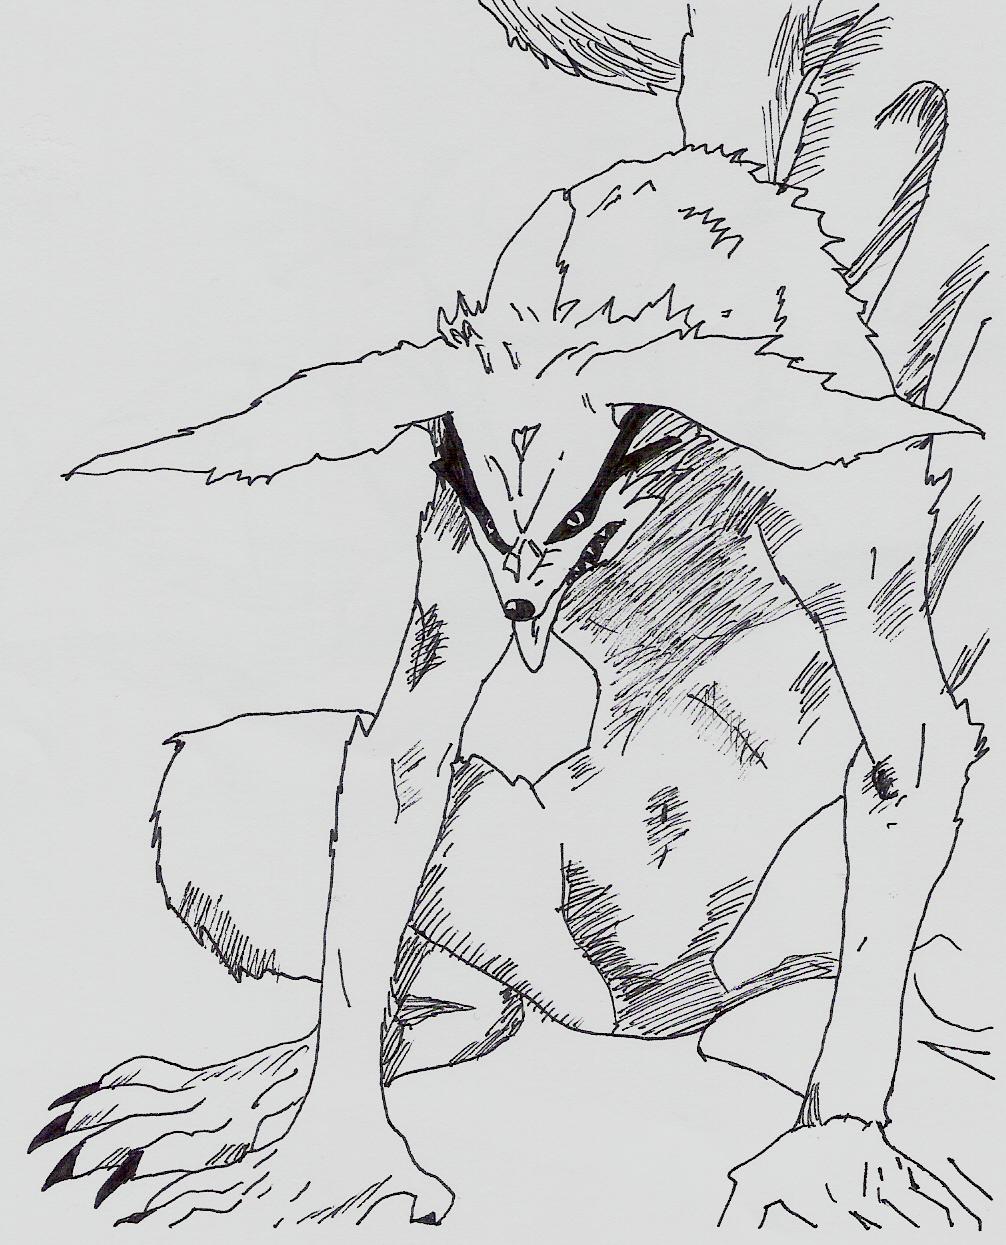 kyuubi, nine tailed demon fox by sparx